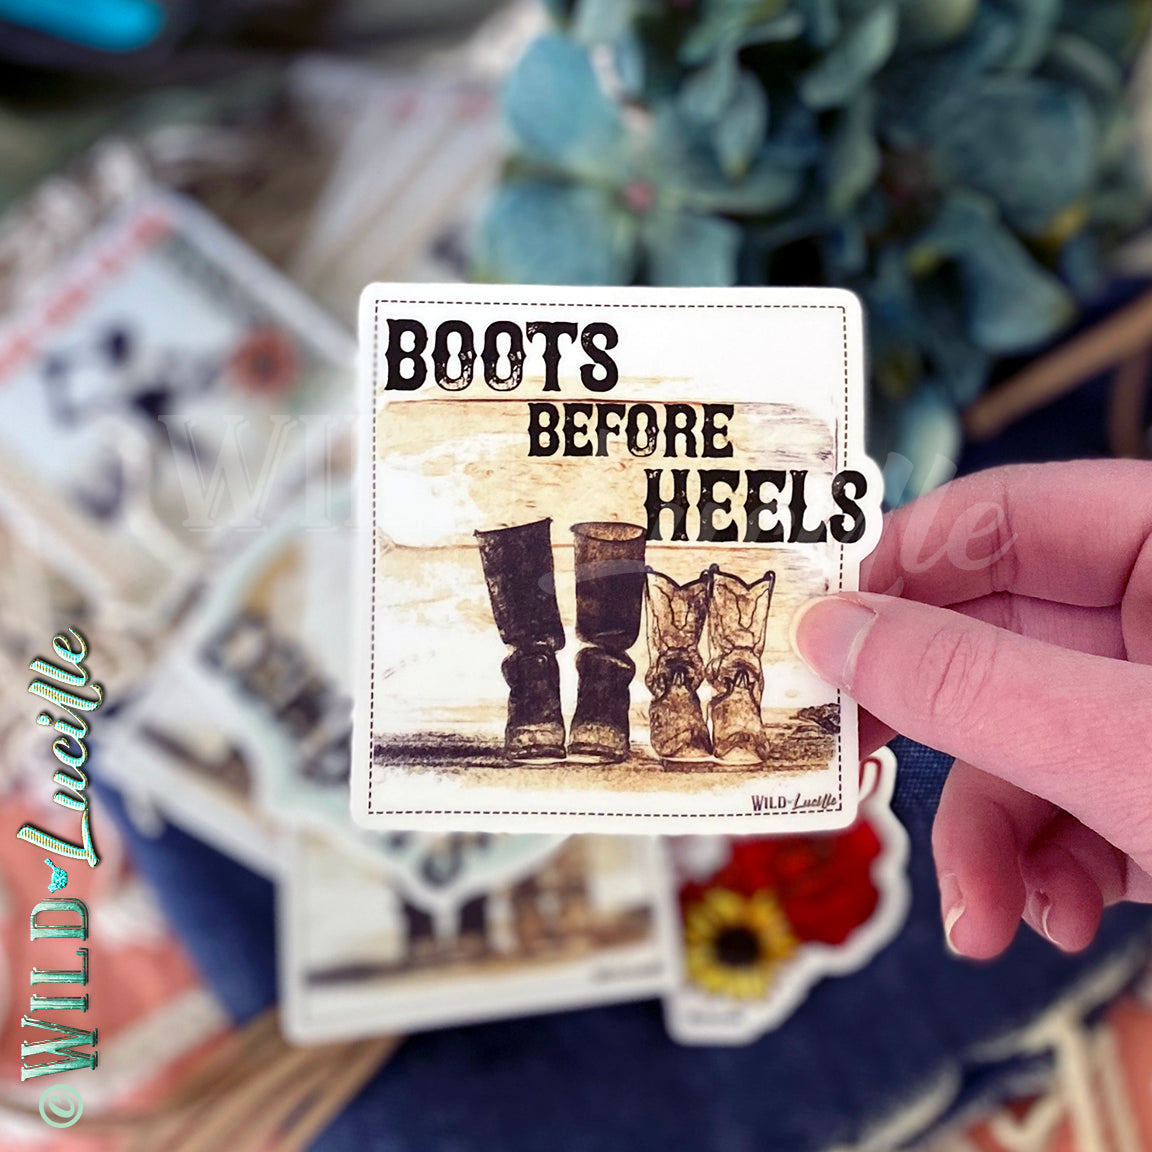 Boots Before Heels - Western Vinyl Sticker Decal